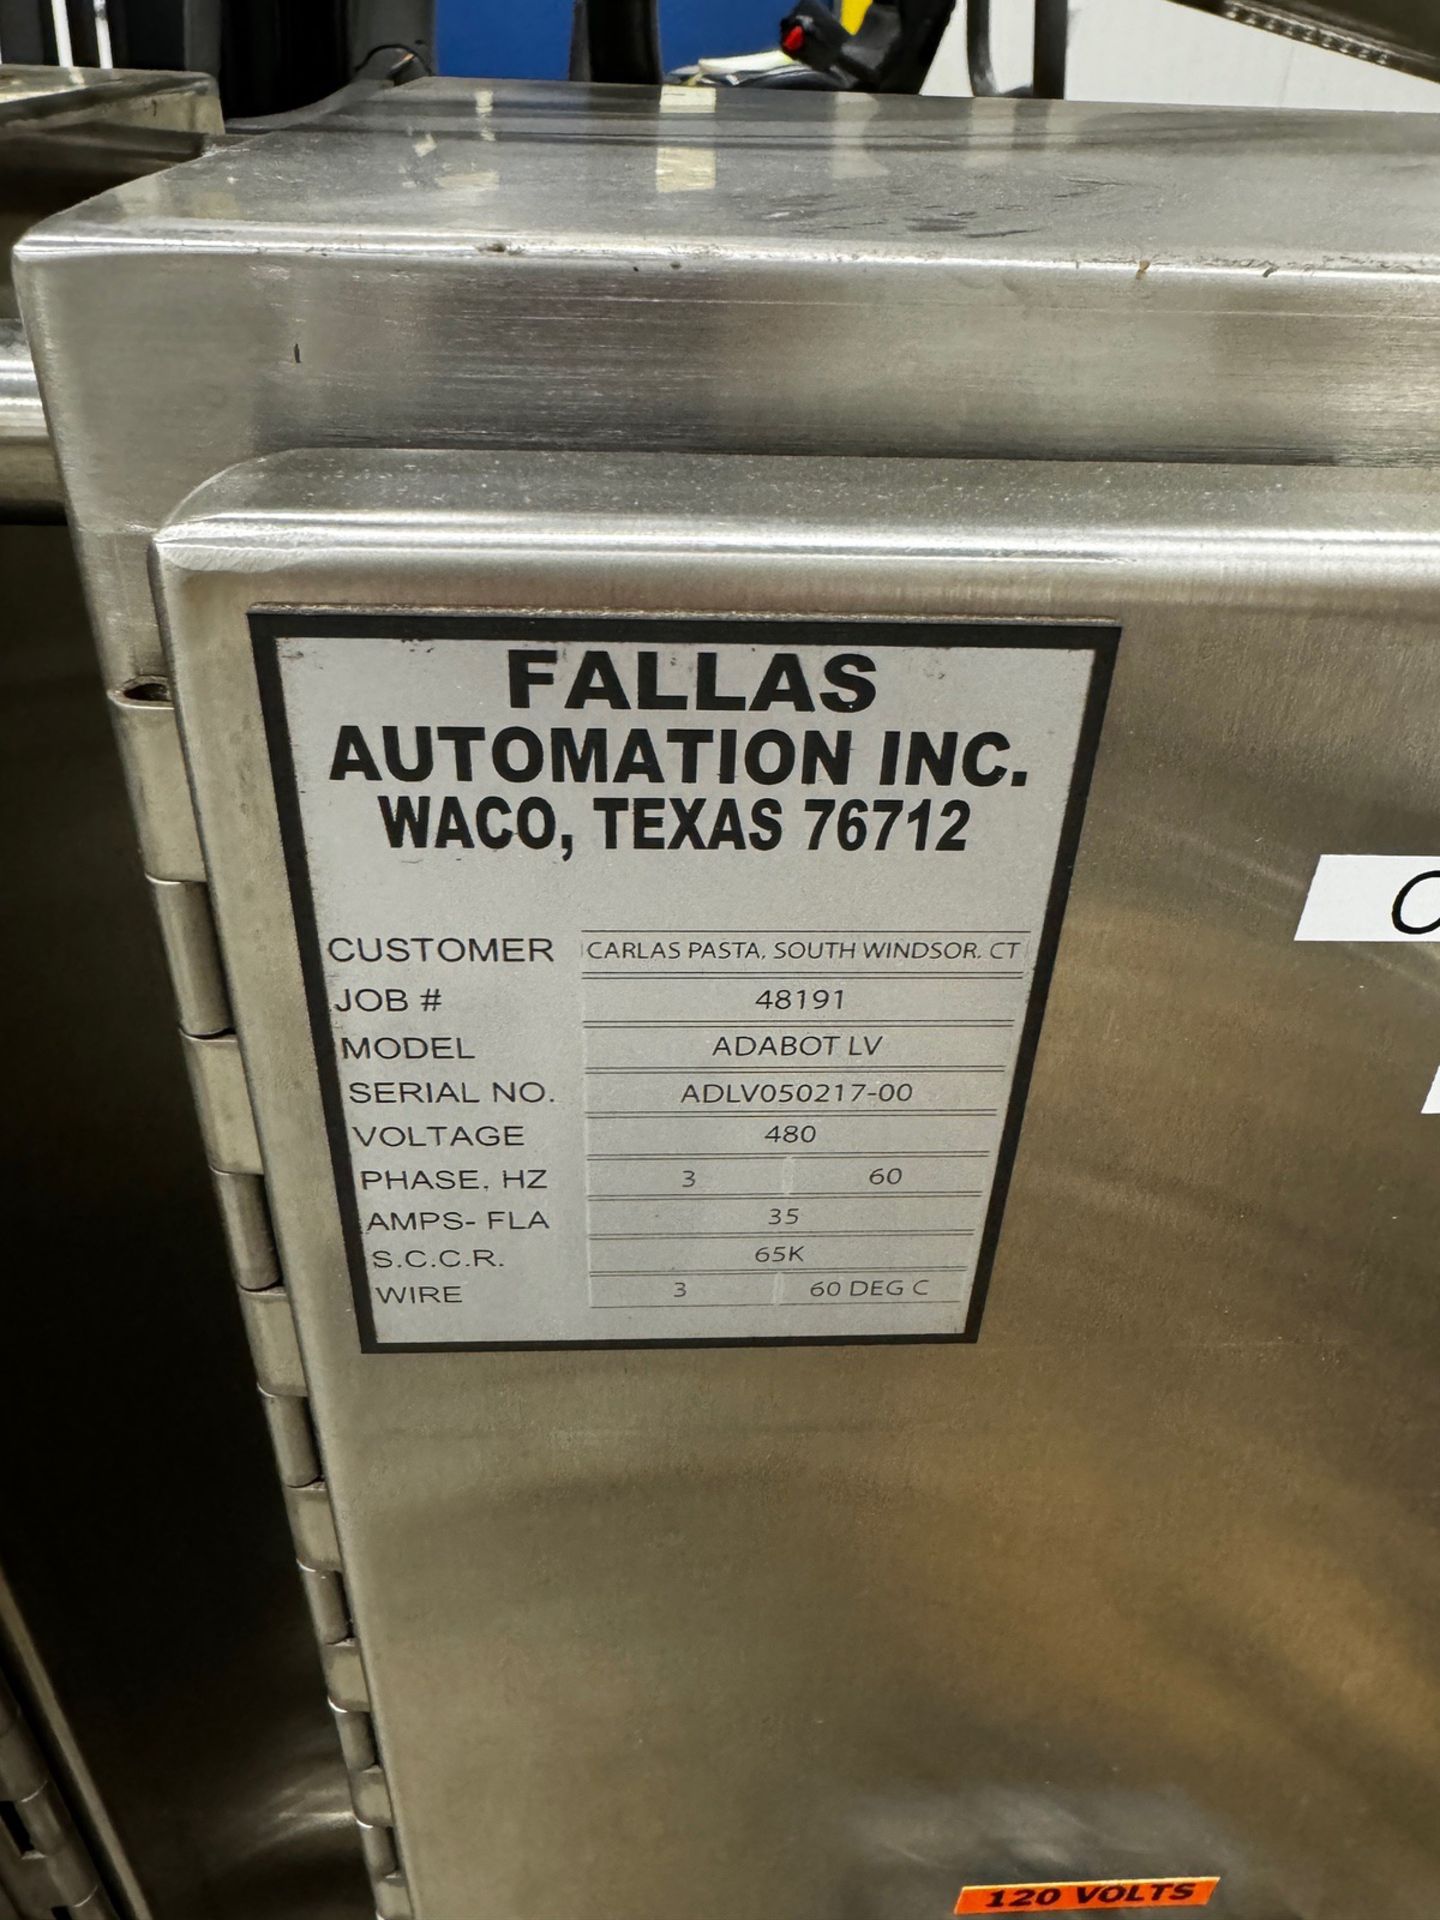 2018 Fallas ADABOT LV Robotic Case Packer, S/N 48191 | Rig Fee $1100 - Image 4 of 8